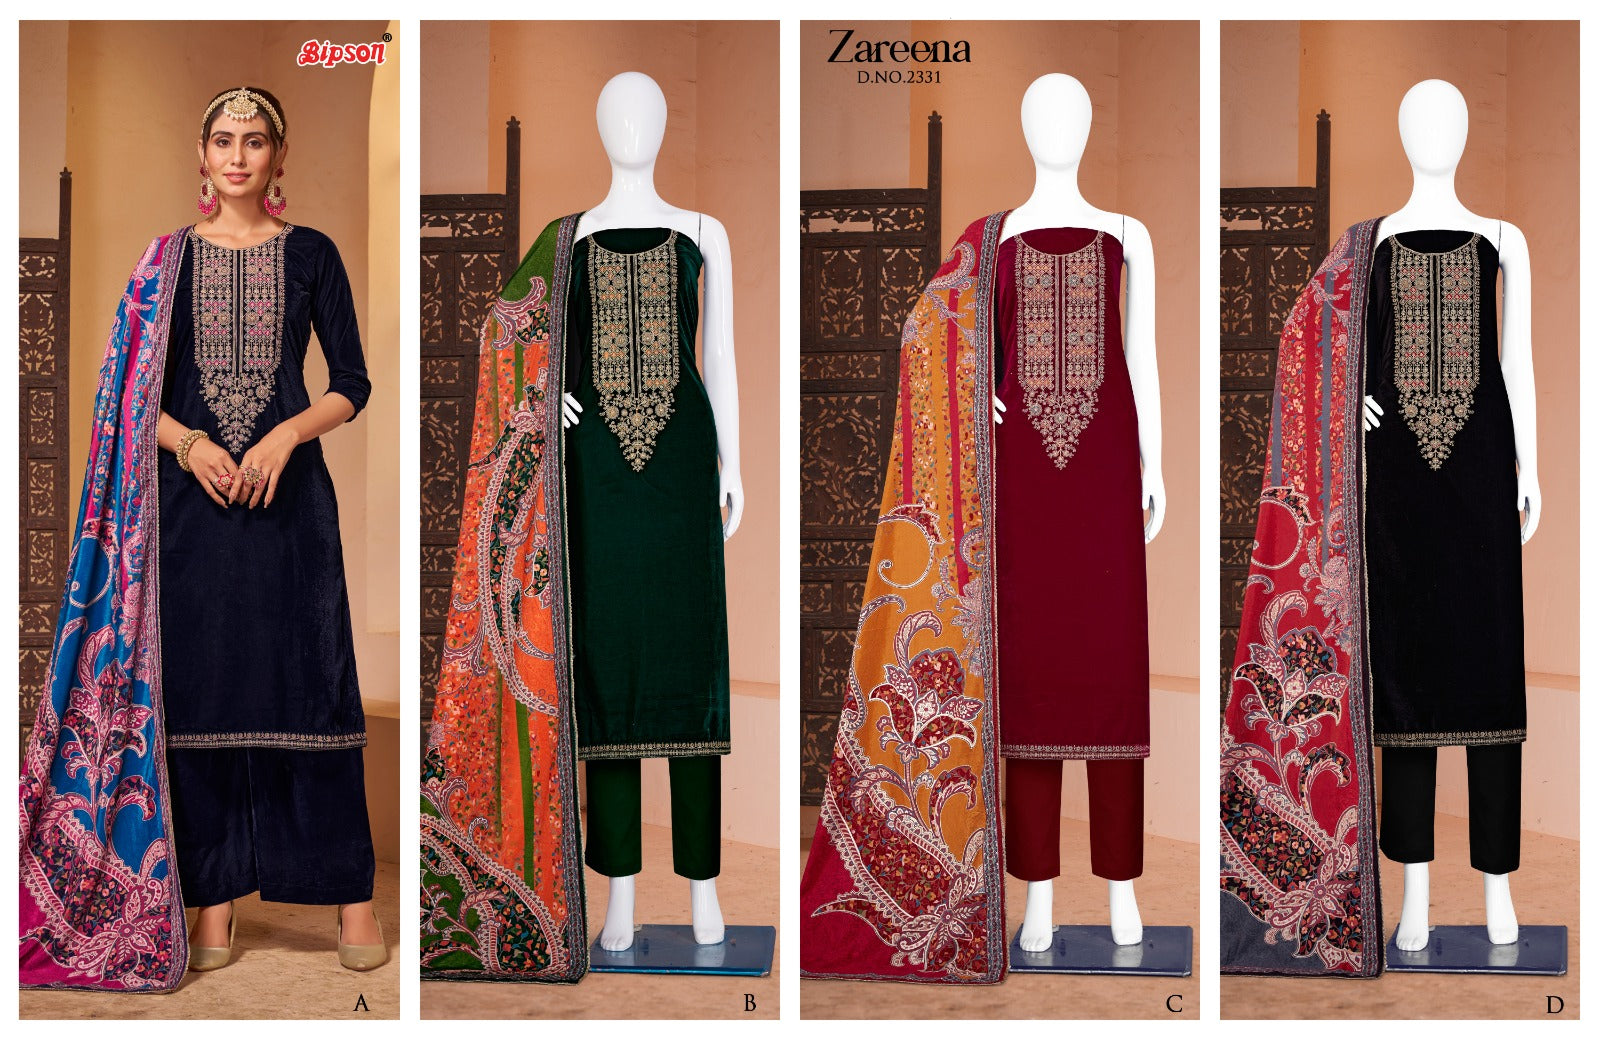 Zareena 2331 Bipson Prints Pashmina Suits